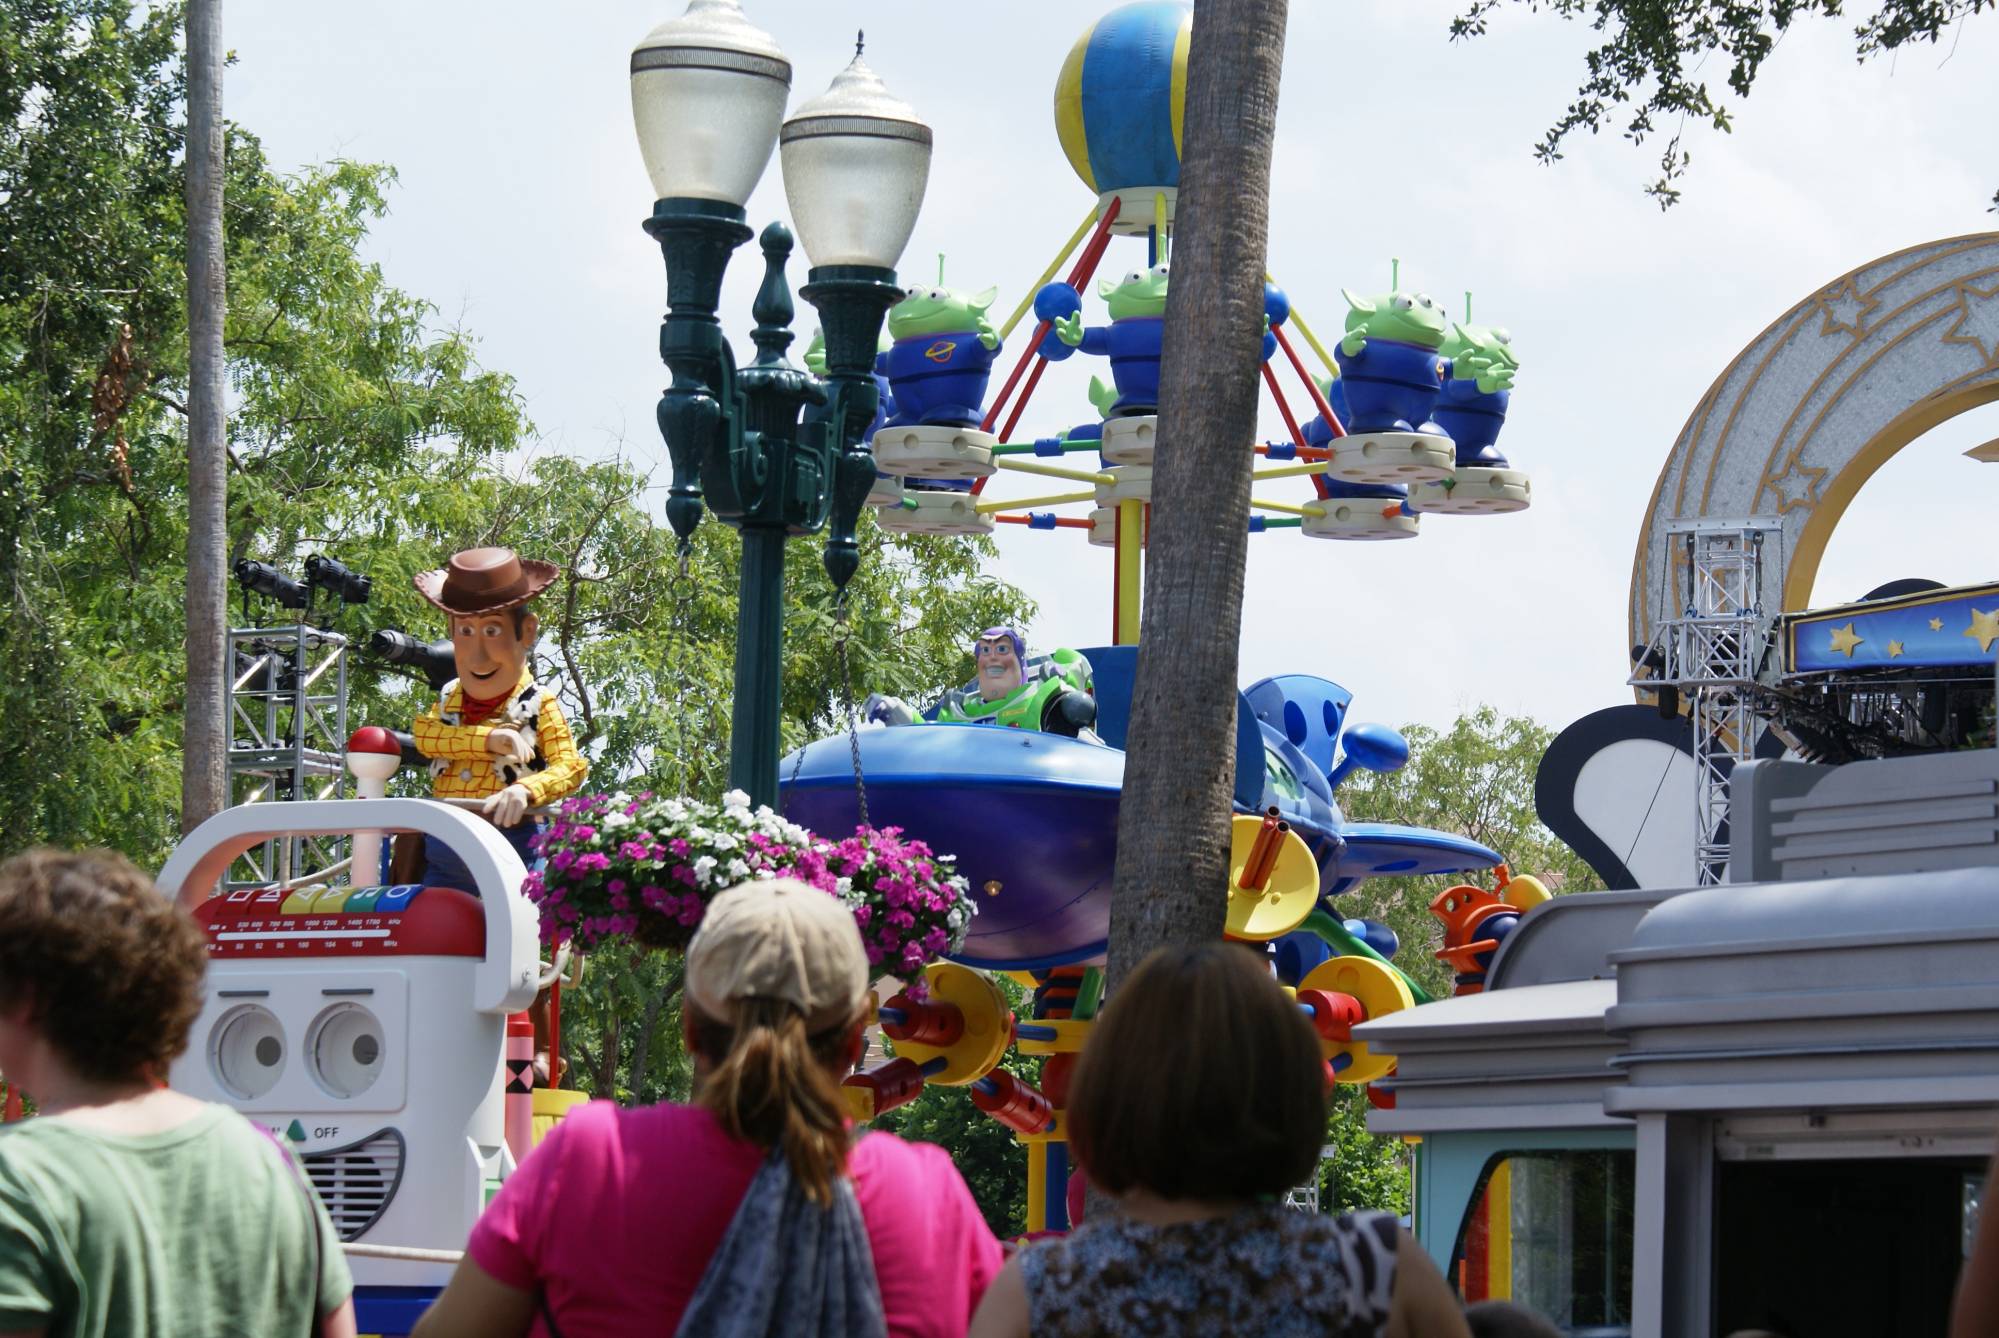 Woody in the Pixar Parade